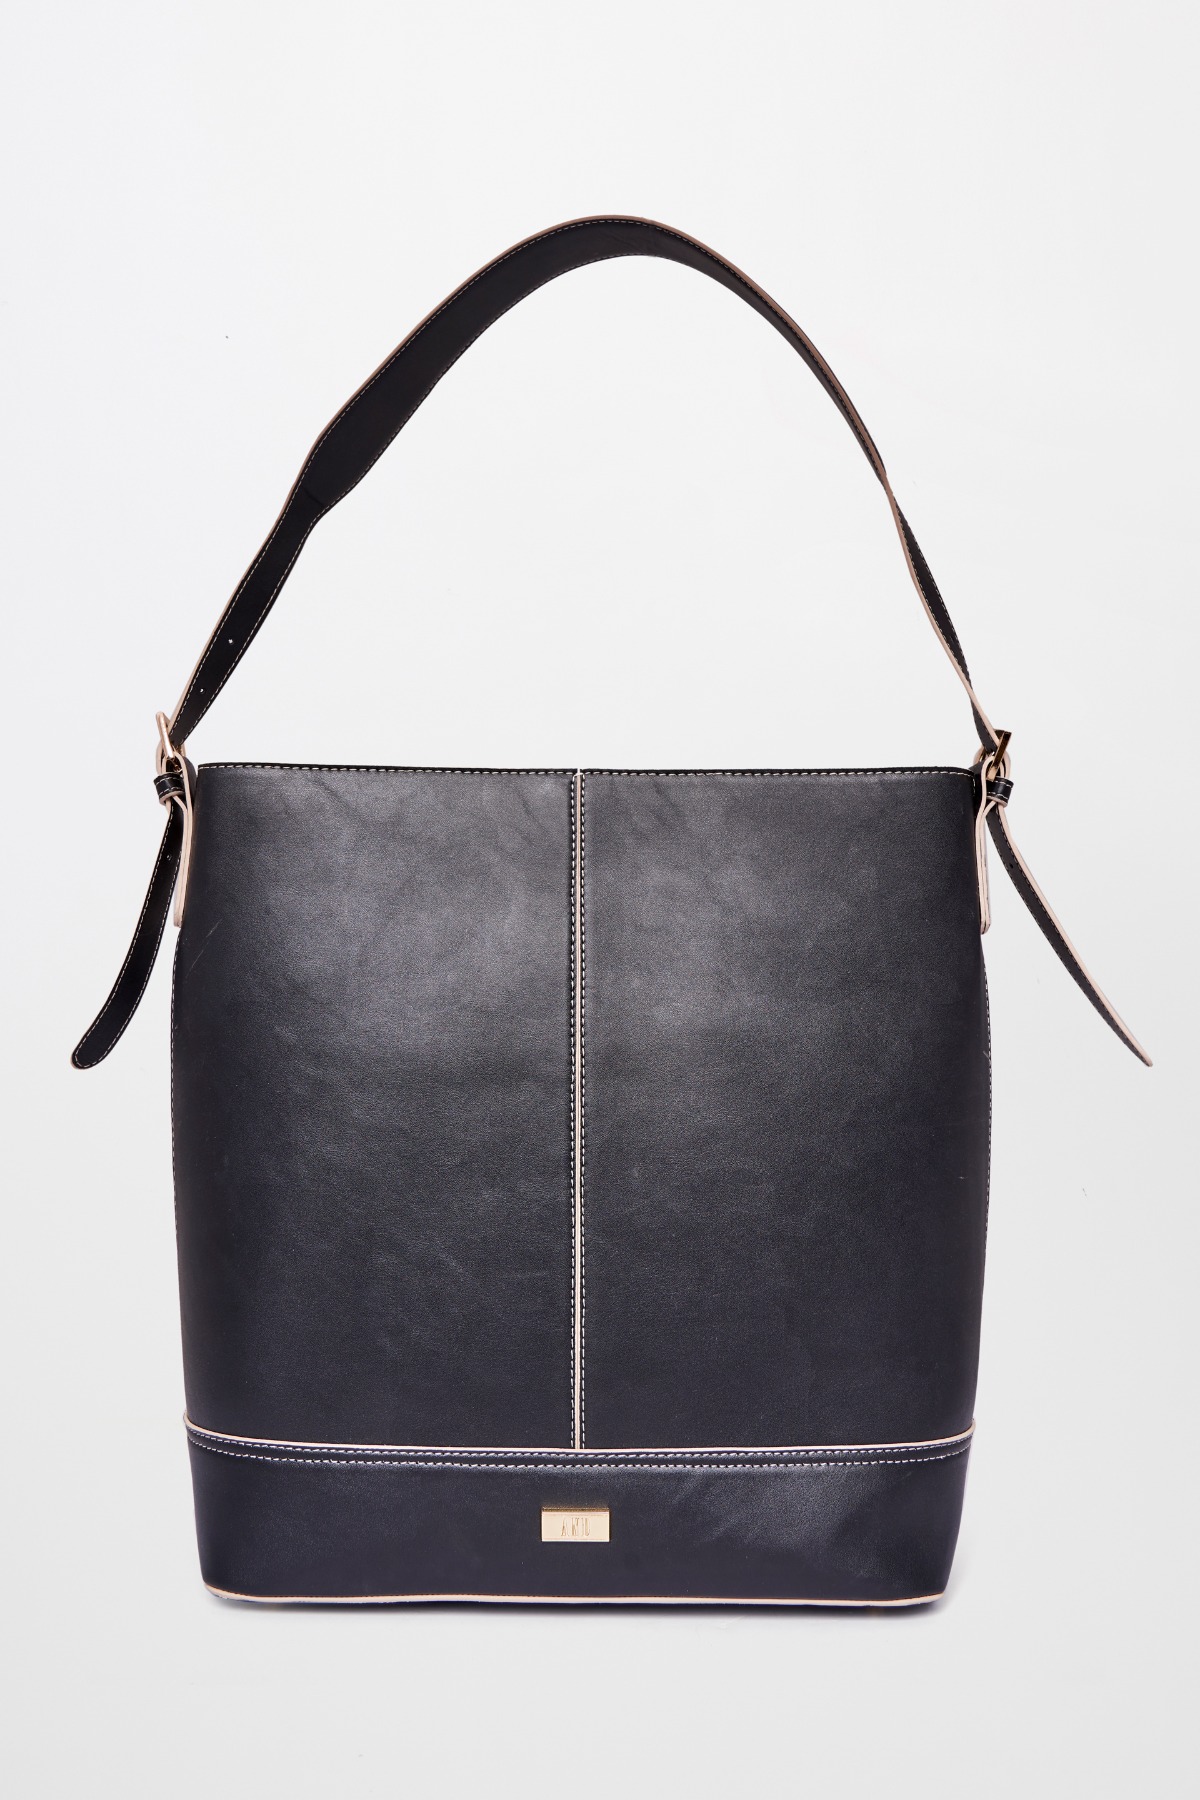 2 - Black Handbag, image 1